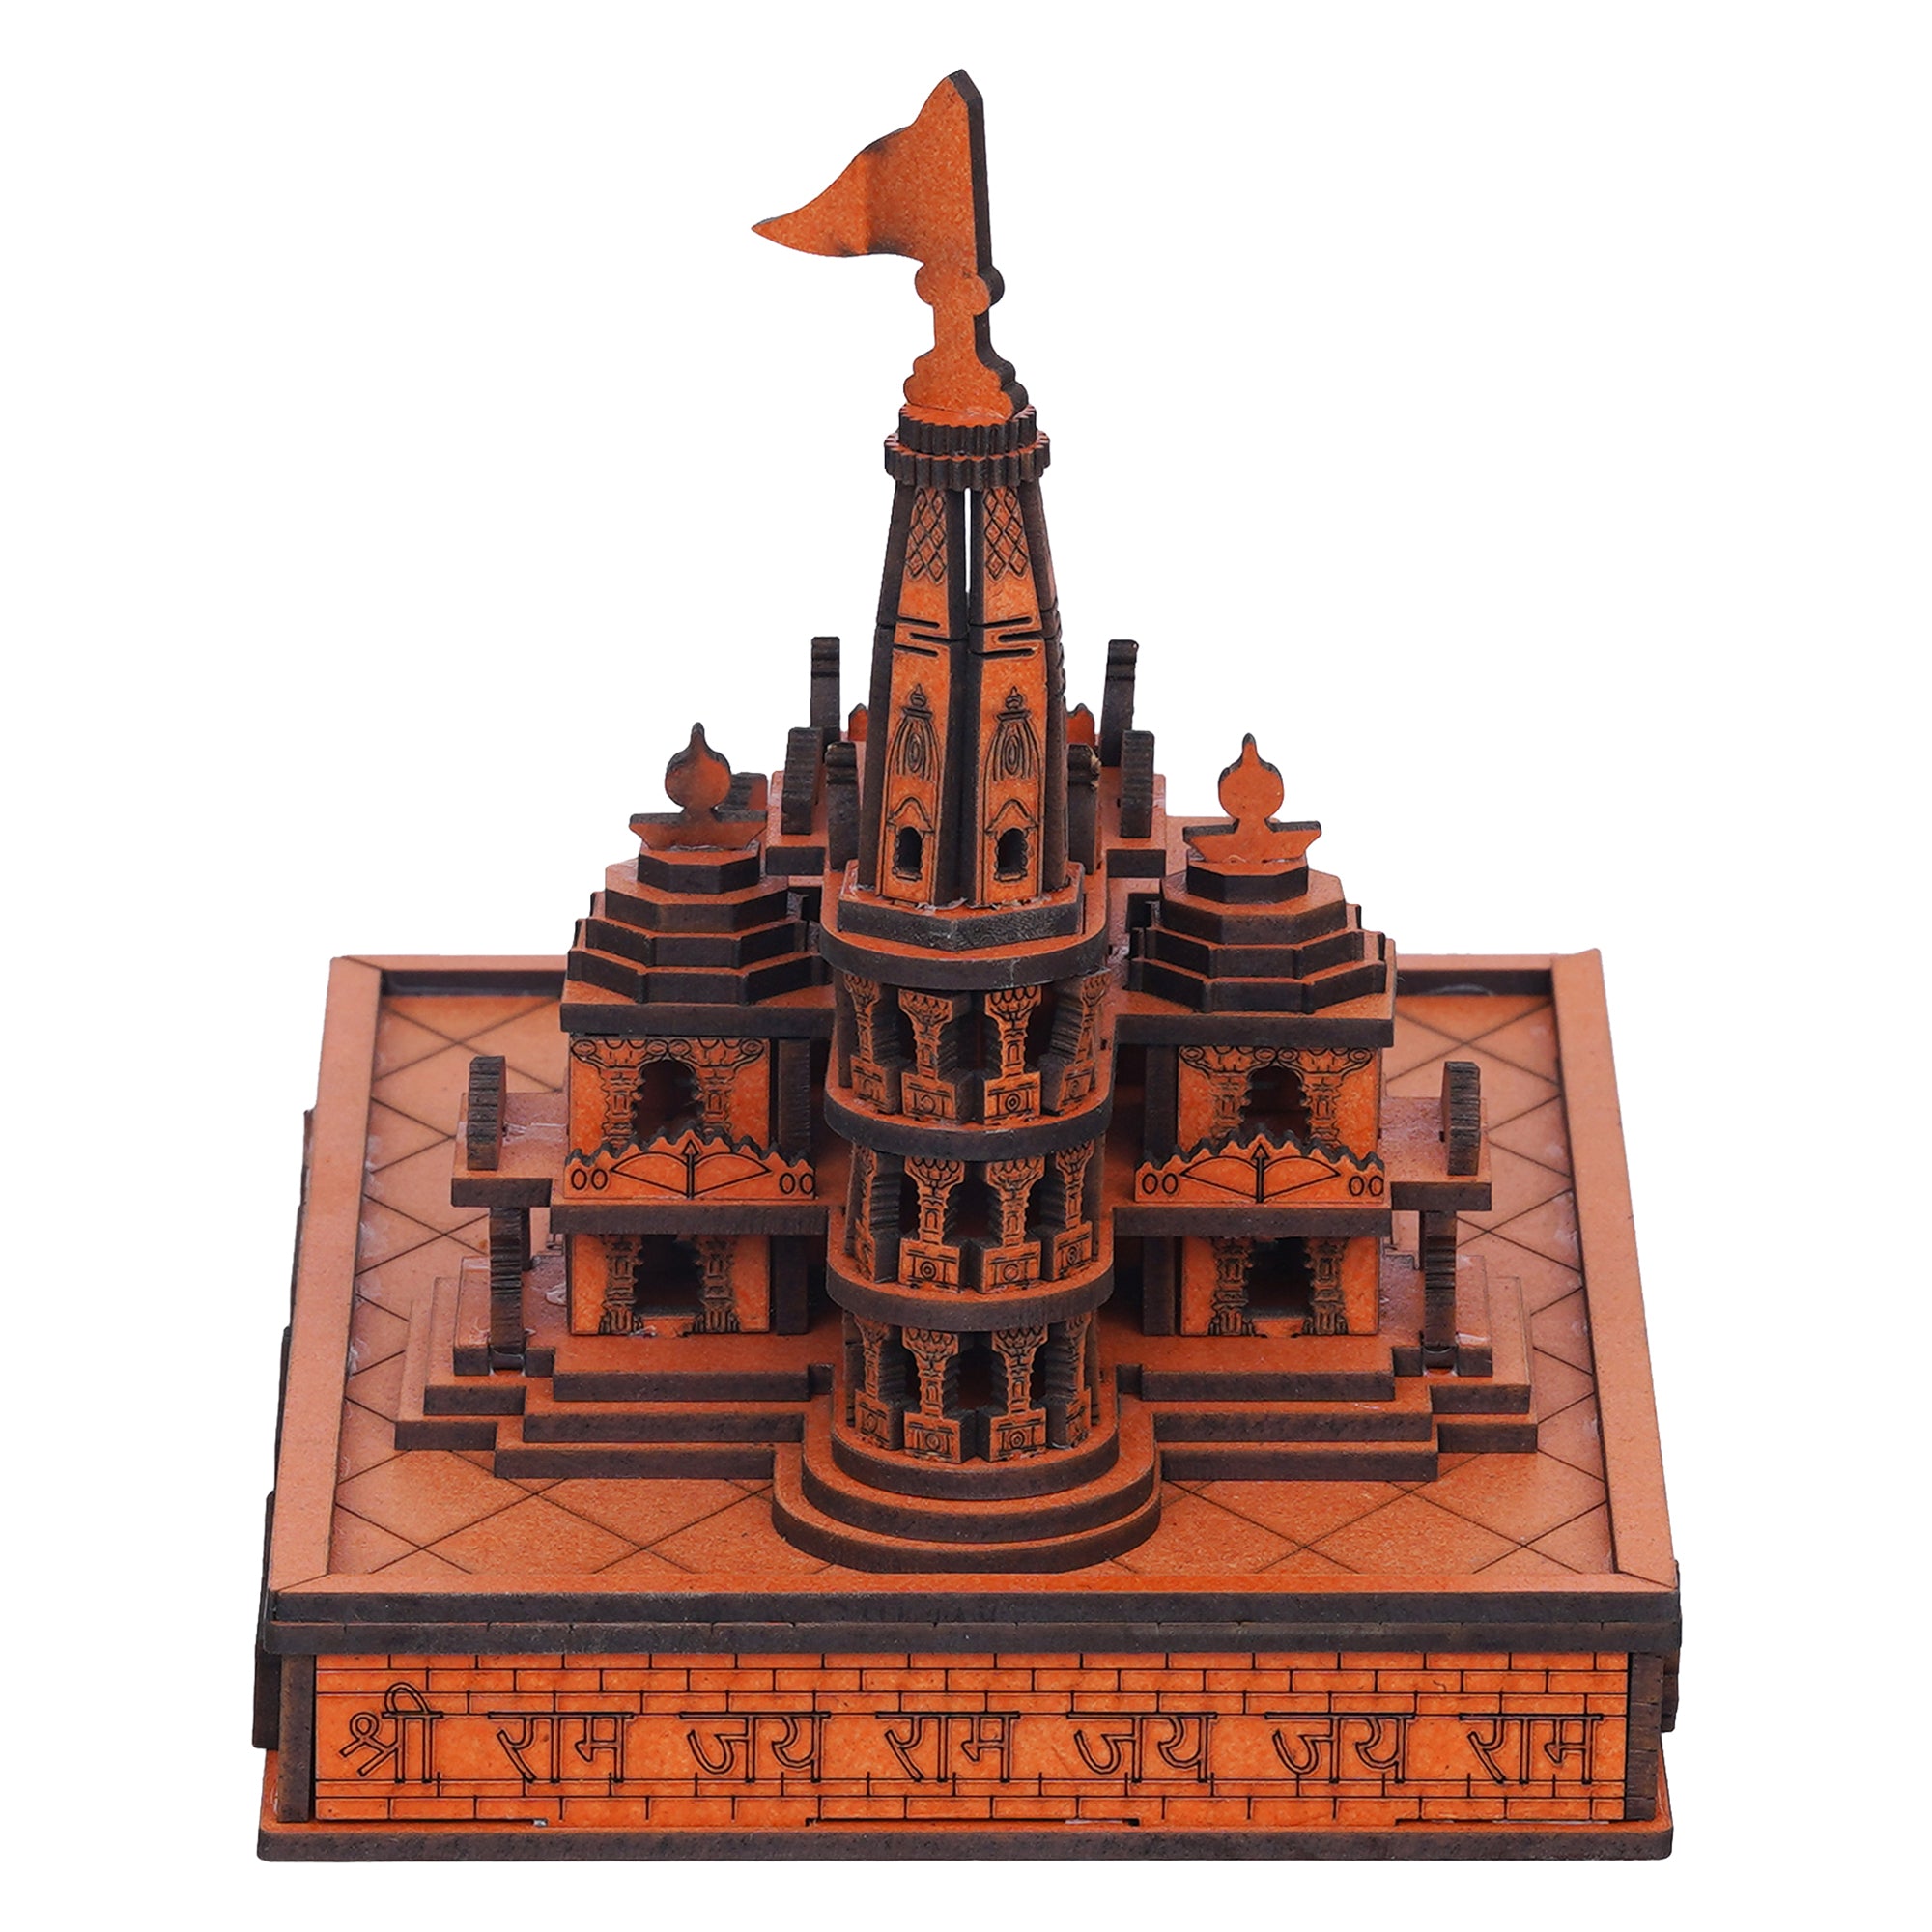 eCraftIndia Shri Ram Mandir Ayodhya Model - Wooden MDF Craftsmanship Authentic Designer Temple - Ideal for Home Temple, Decor, and Spiritual Gifting (Orange) 8